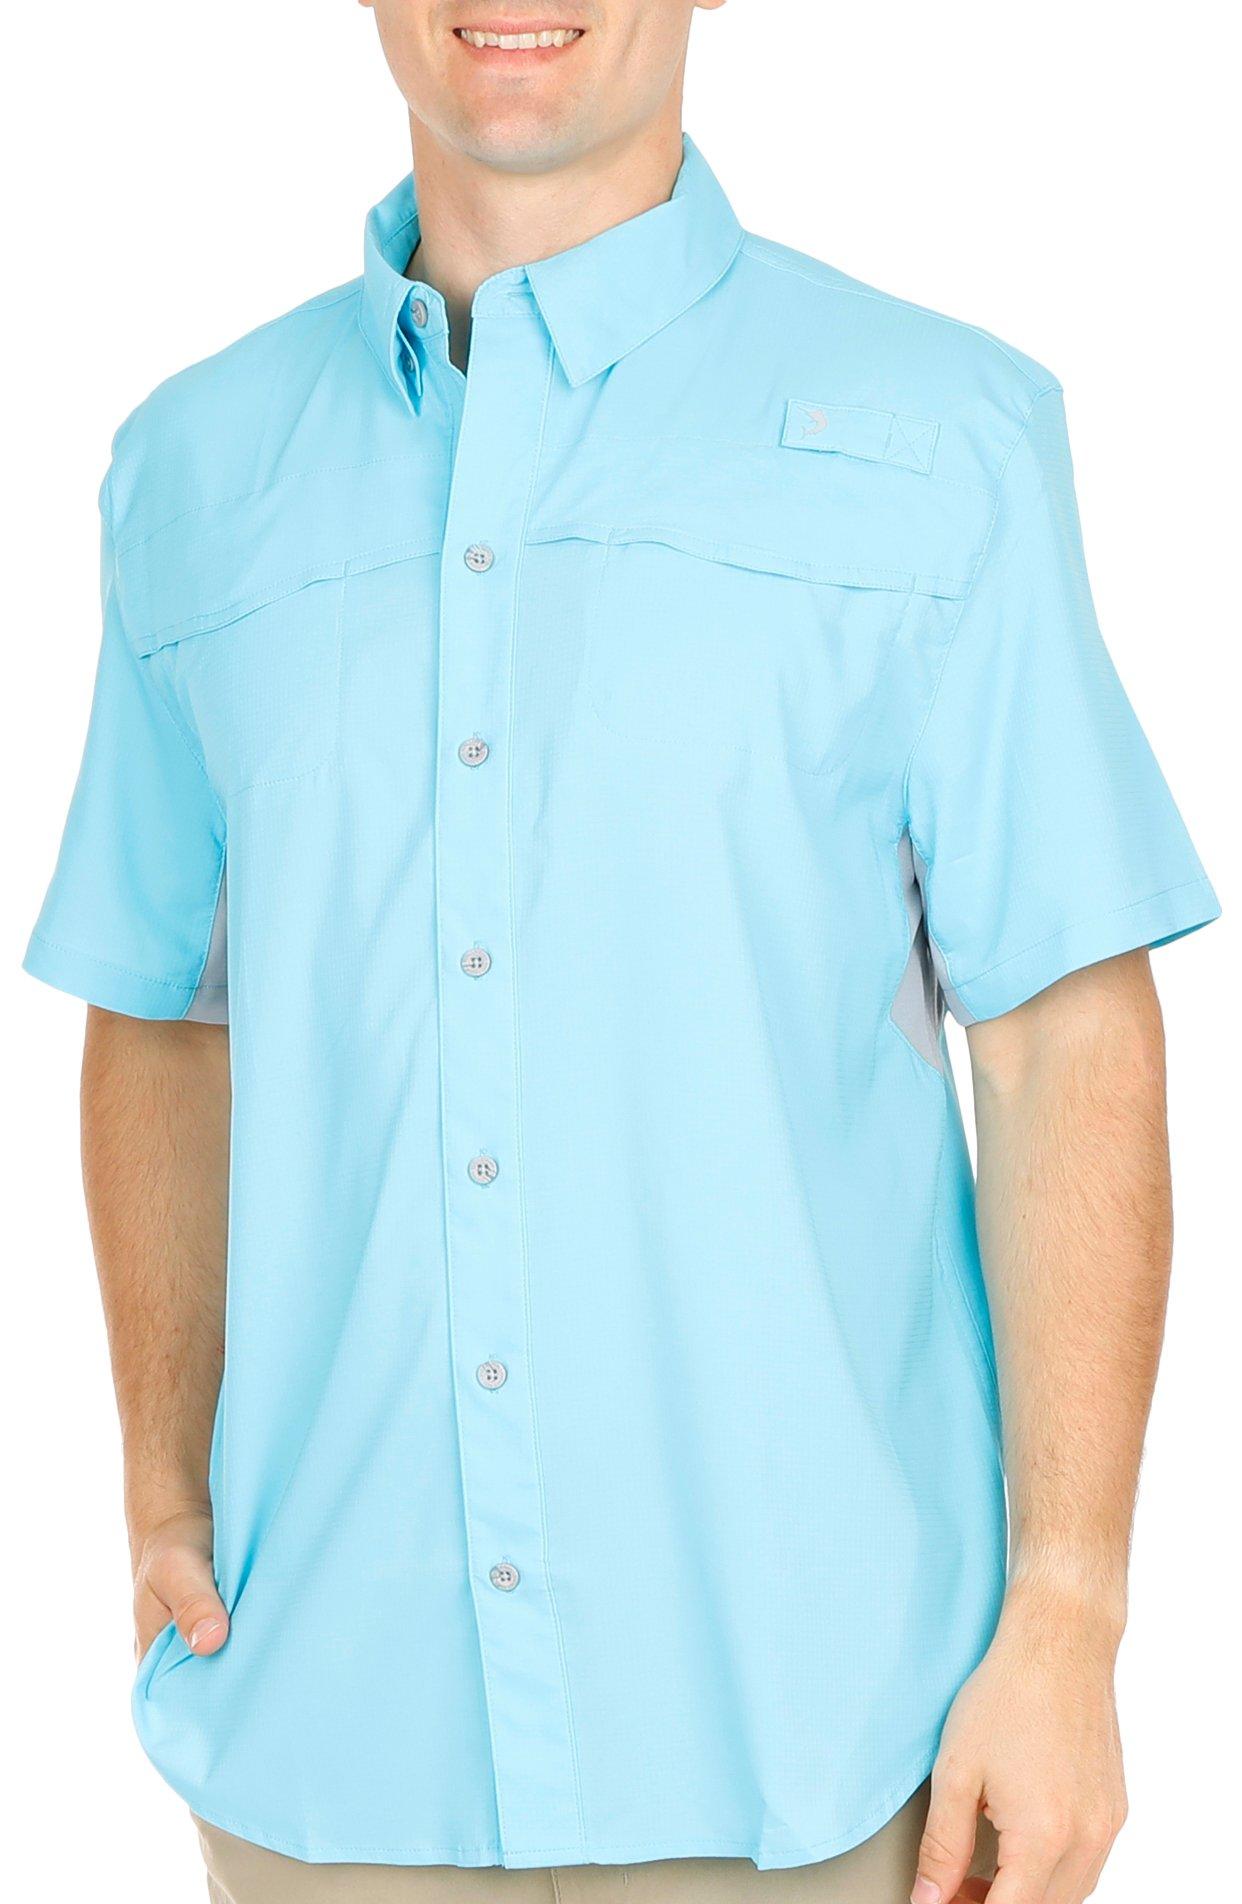 Reel Legends Mens Solid Mariner II Short Sleeve Shirt - Turquoise - Medium